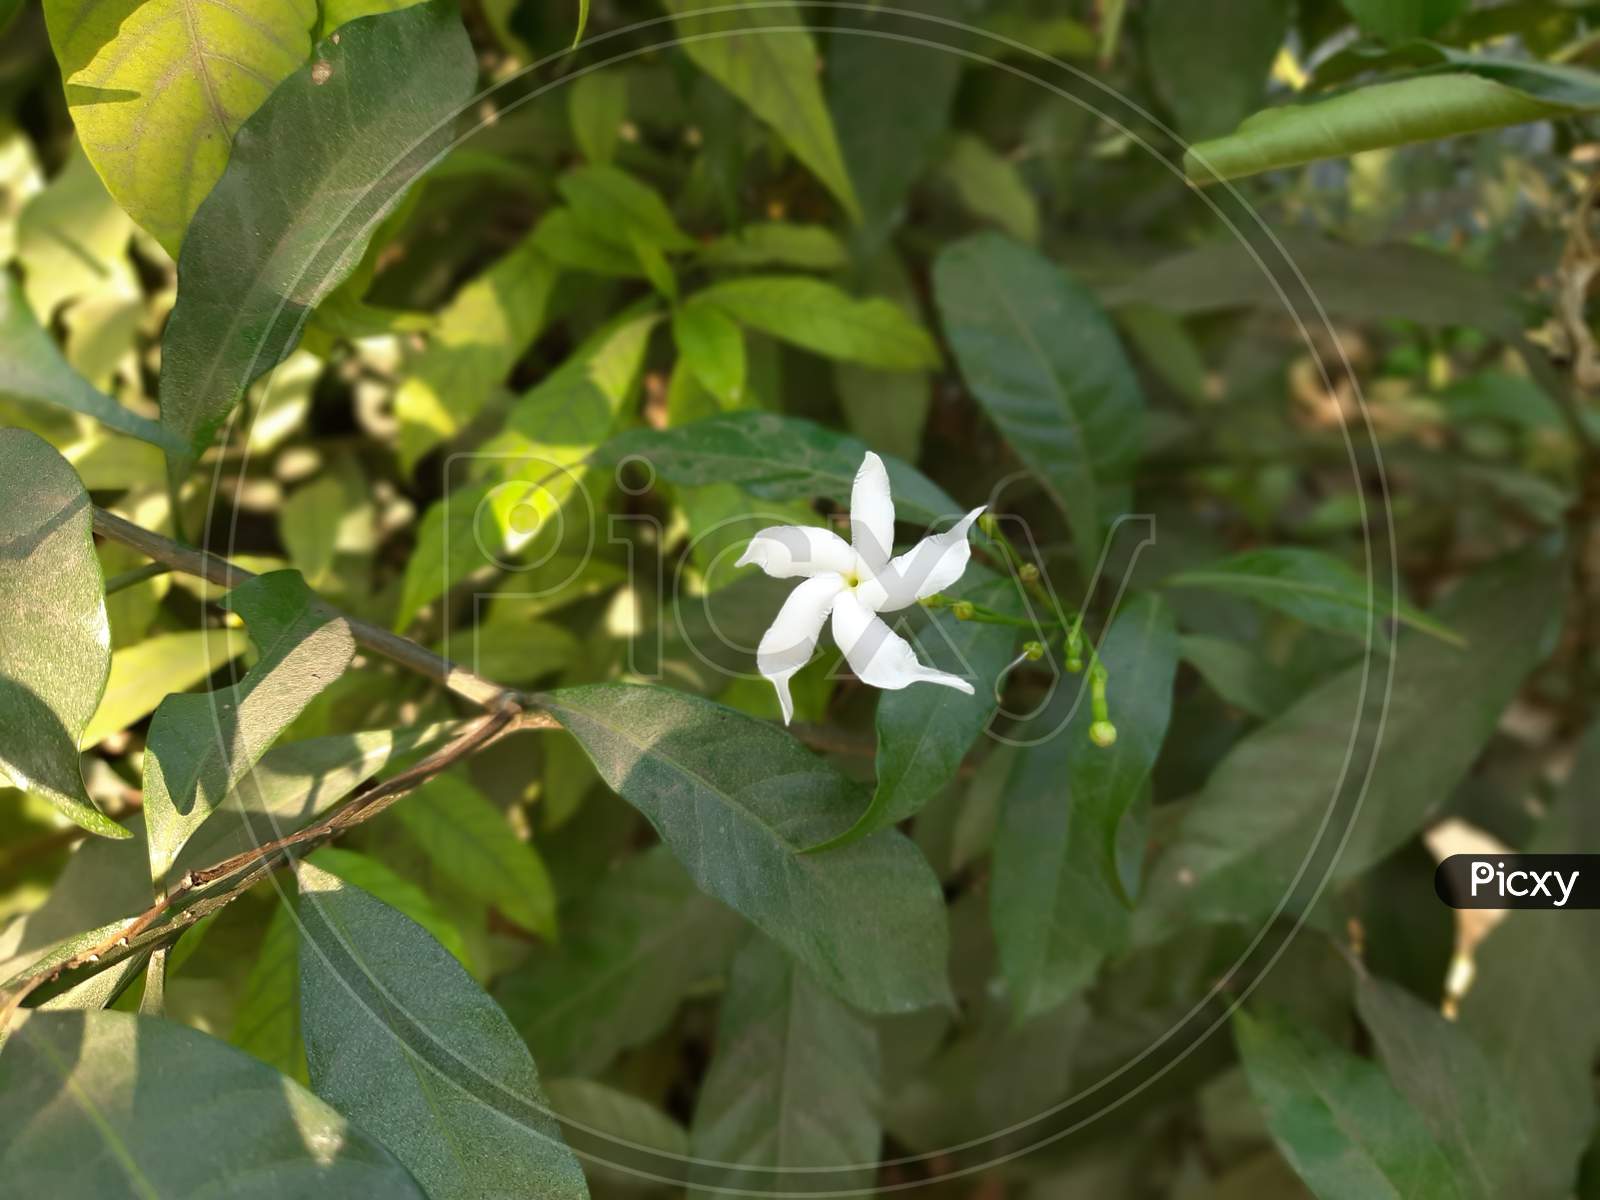 White Flower image in Garden,Flower tree ,Background Blur, Selective Focus